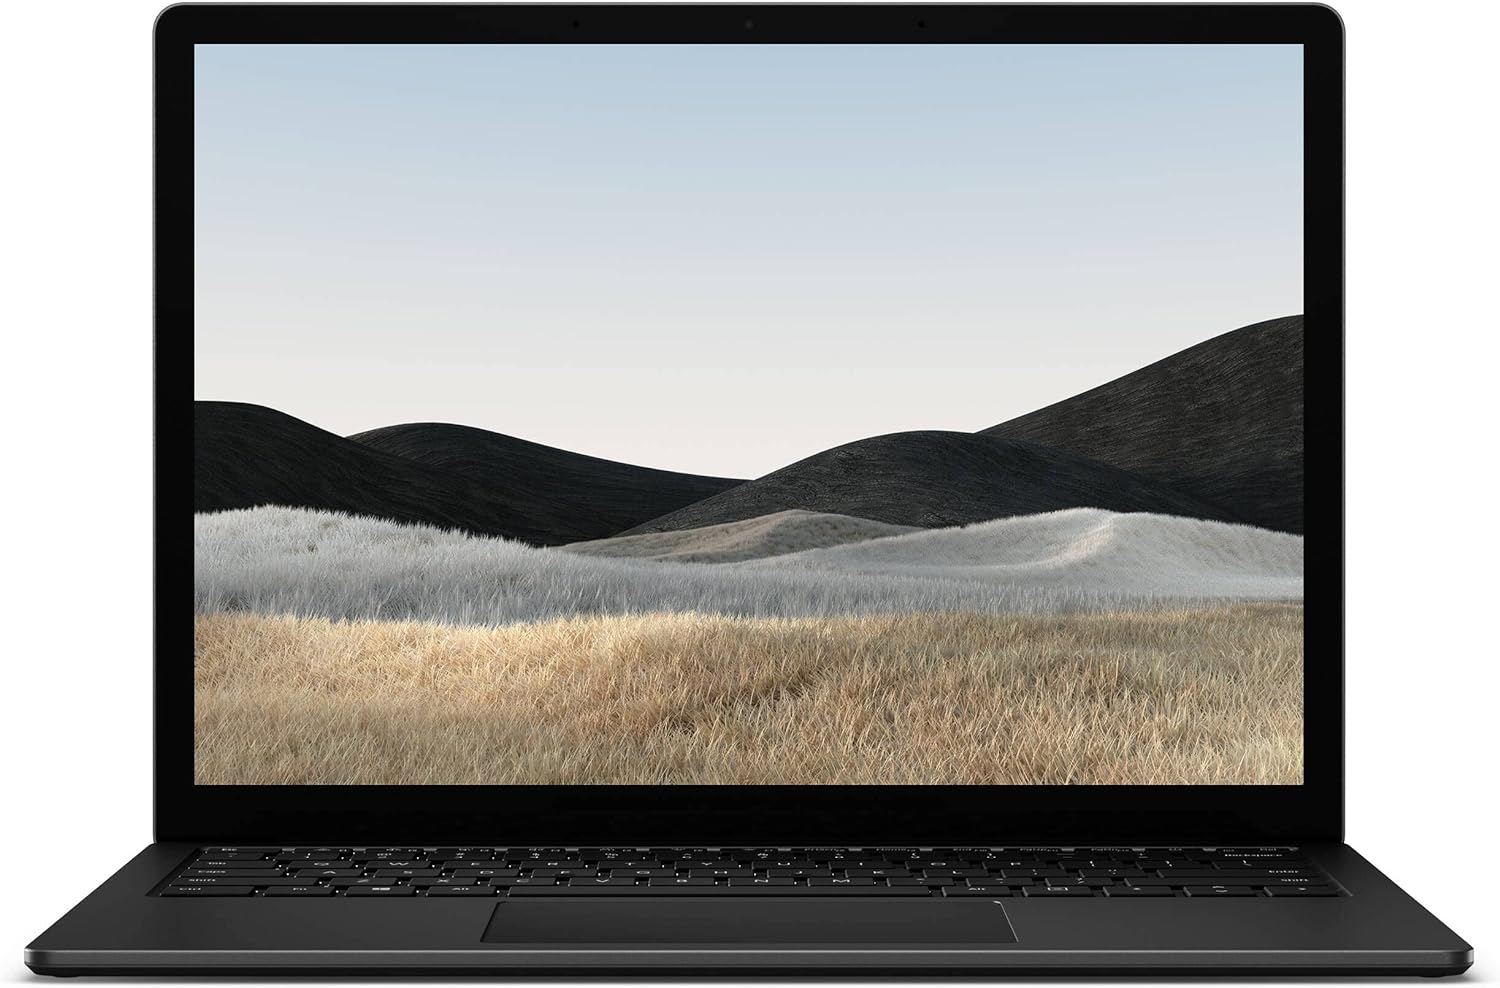 Microsoft Surface Laptop 4 13.5" Touchscreen, Core i7 1185G7, Business Laptop, 16GB RAM, 512GB SSD, Wi-Fi, Latest Model, Windows 10 Pro, Matte Black, 5F1-00001, Commercial Version